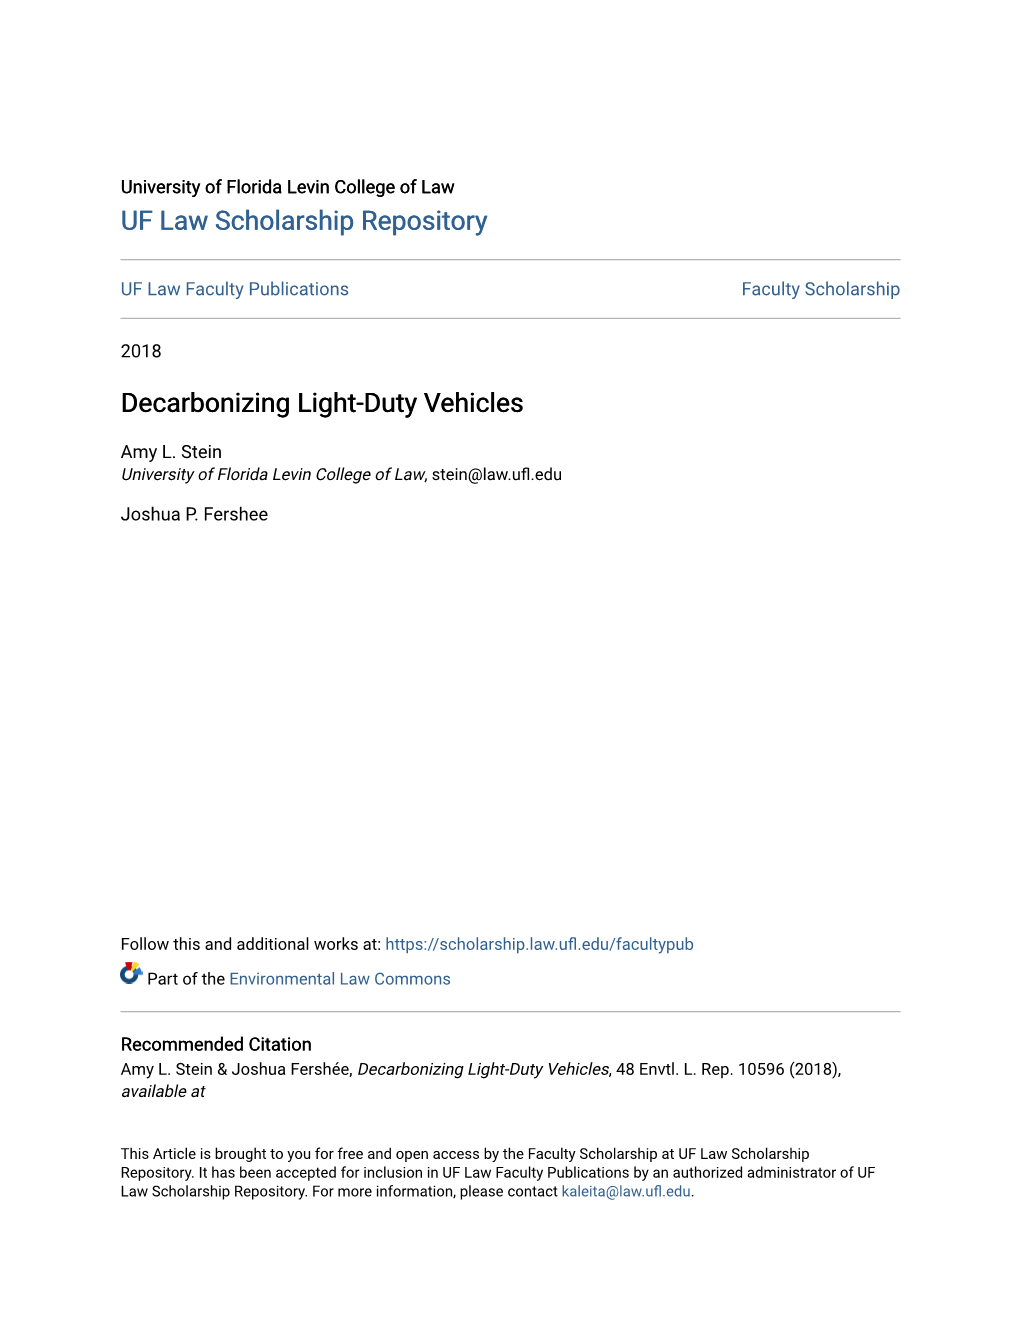 Decarbonizing Light-Duty Vehicles